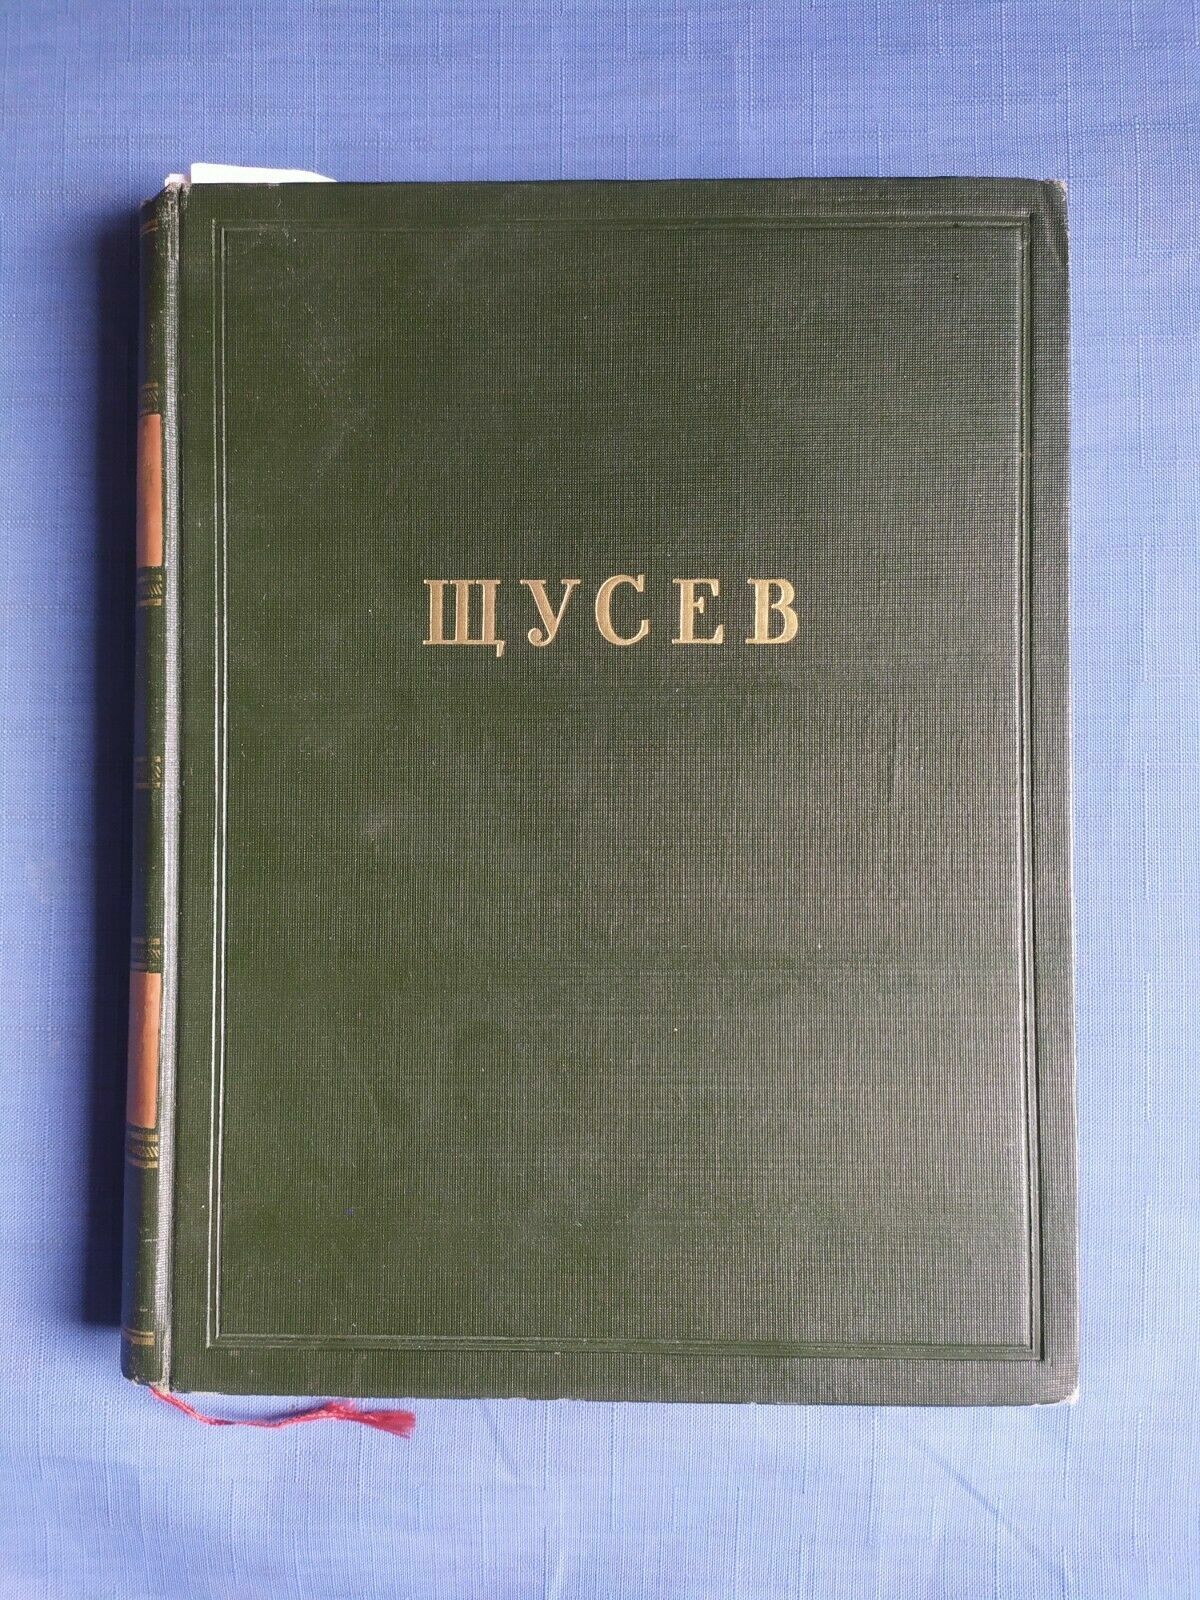 1952 Щусев Shchusev Architecture avantgarde constructivism artdeco Russian book